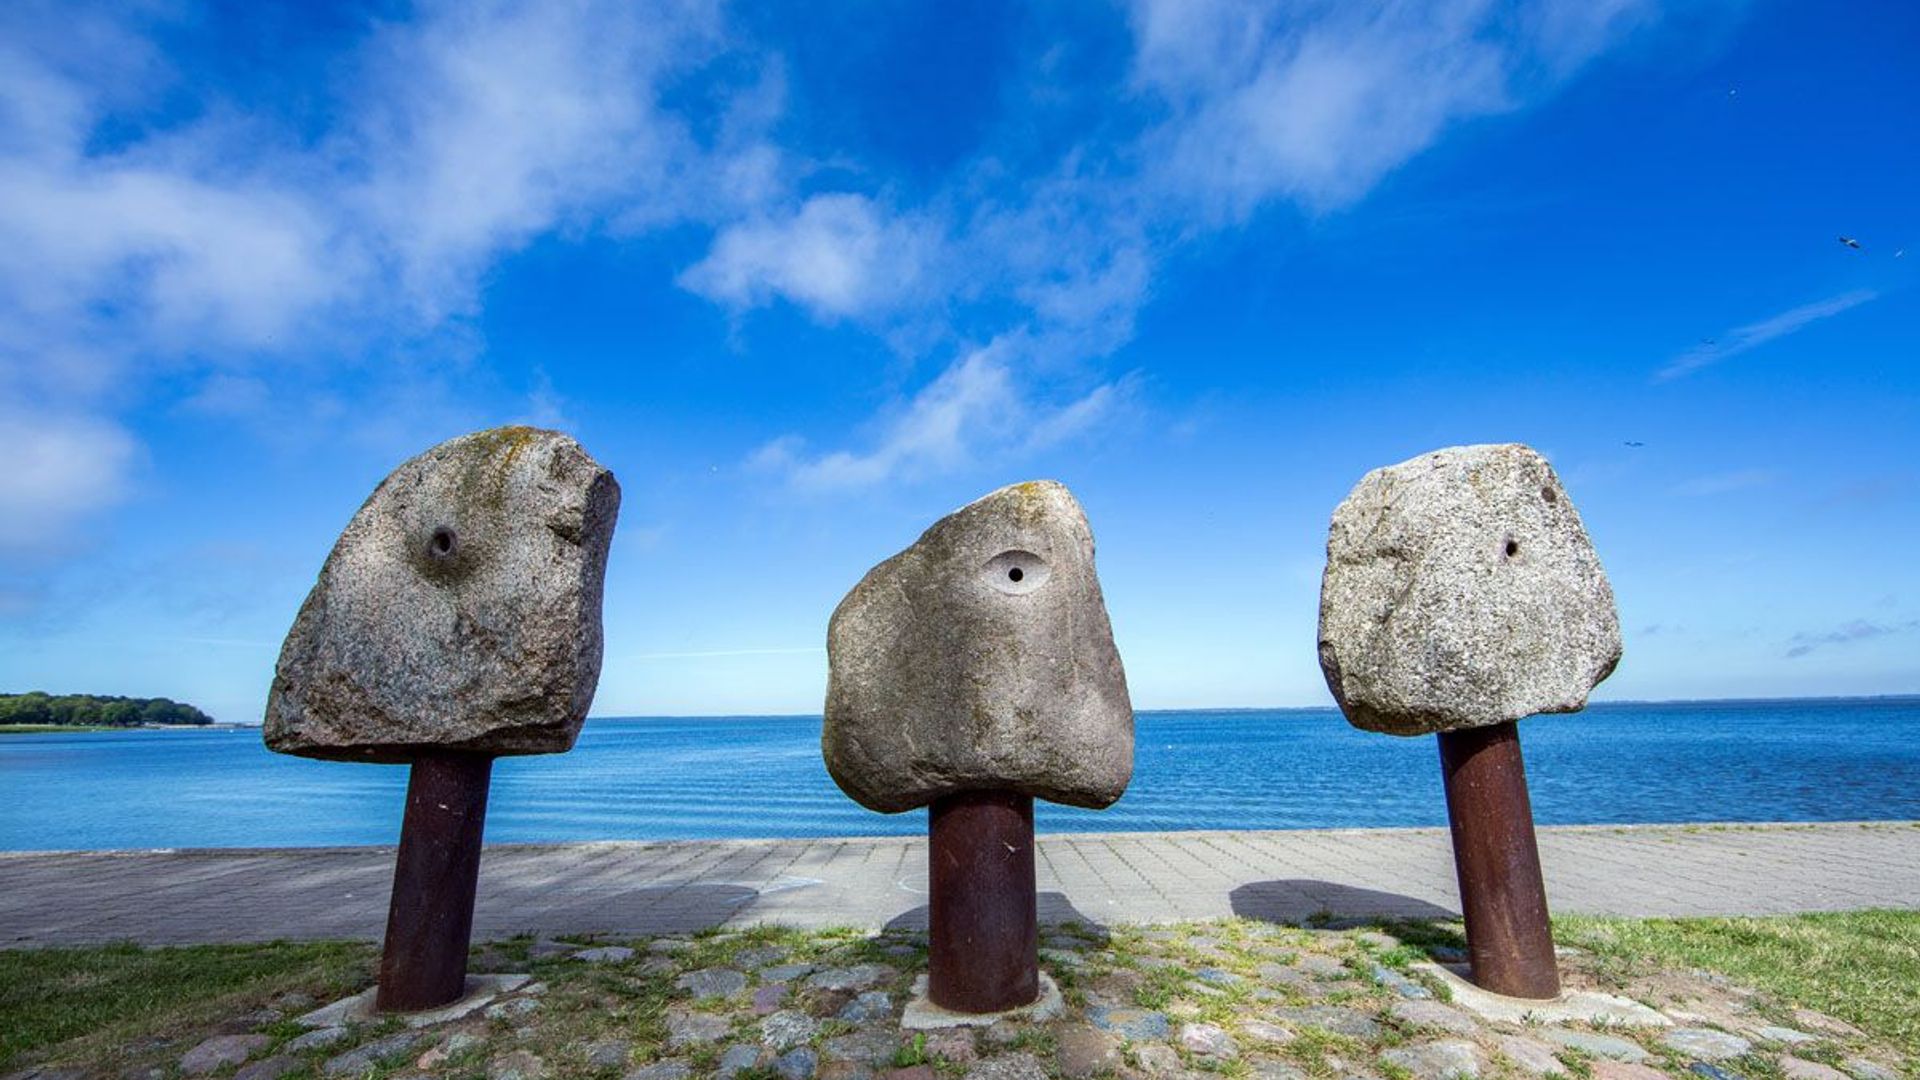 Juodkrantės akmens skulptūrų parkas